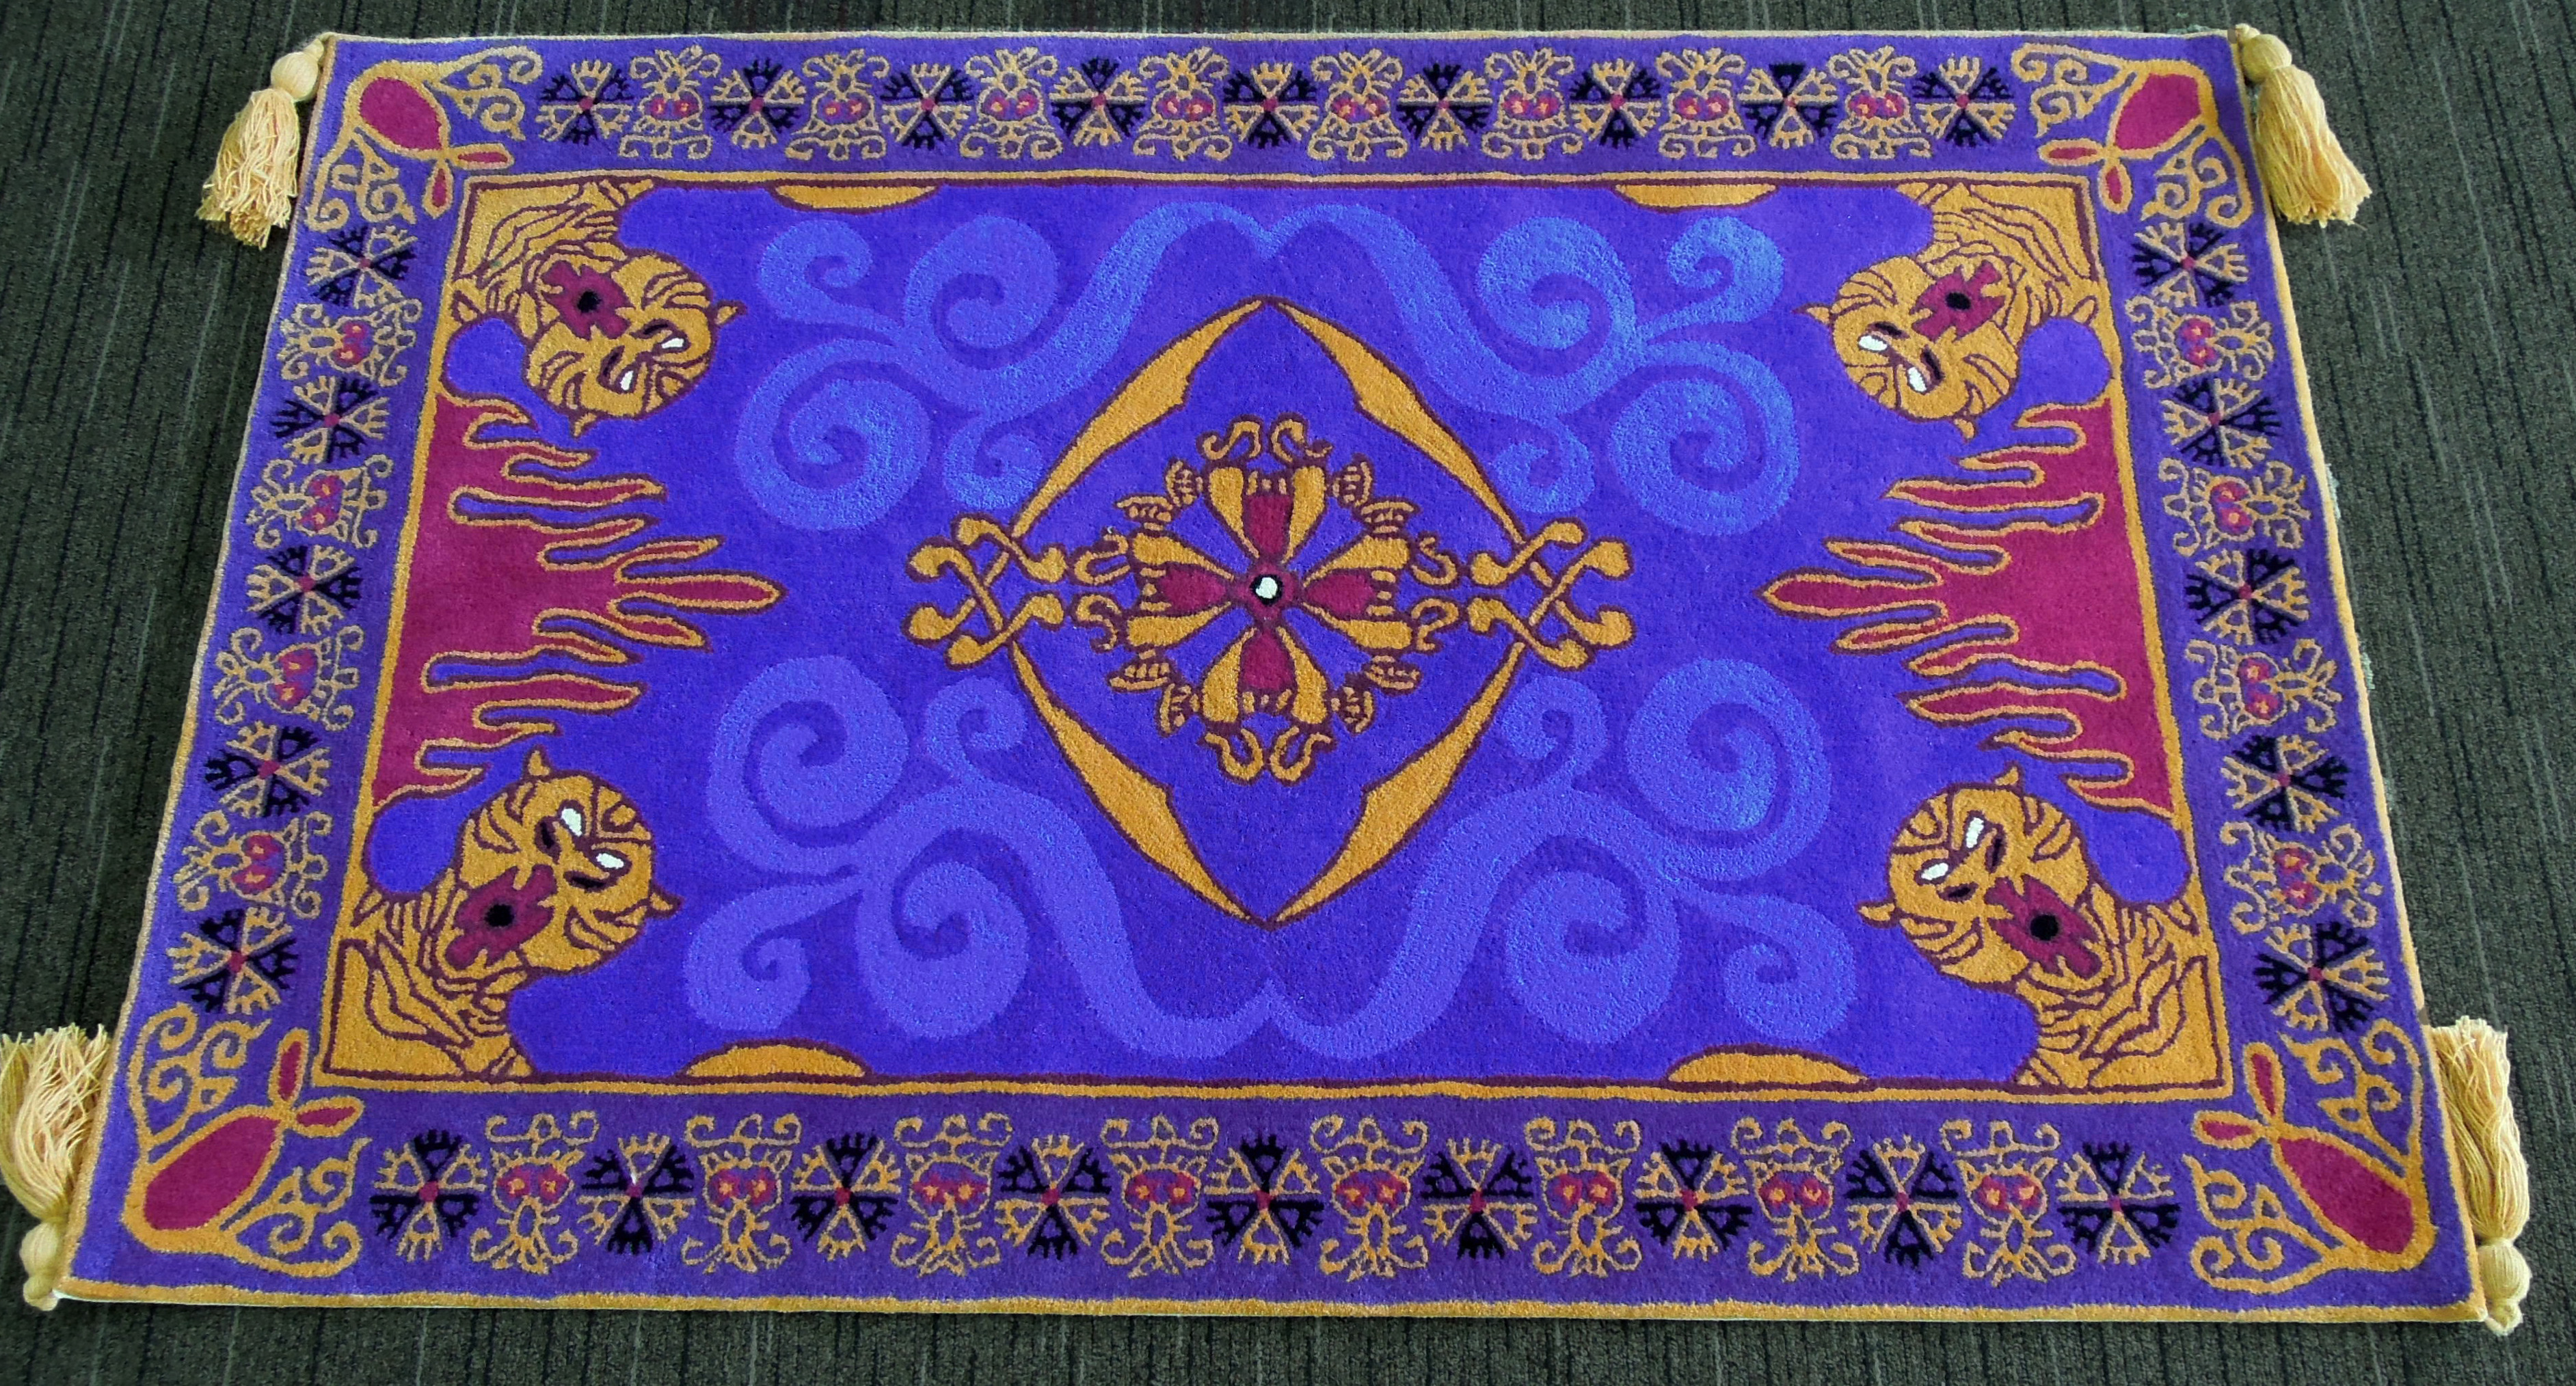 Aladdin S Magic Carpet Complete With Pics Rpf Costume And Prop Maker Community